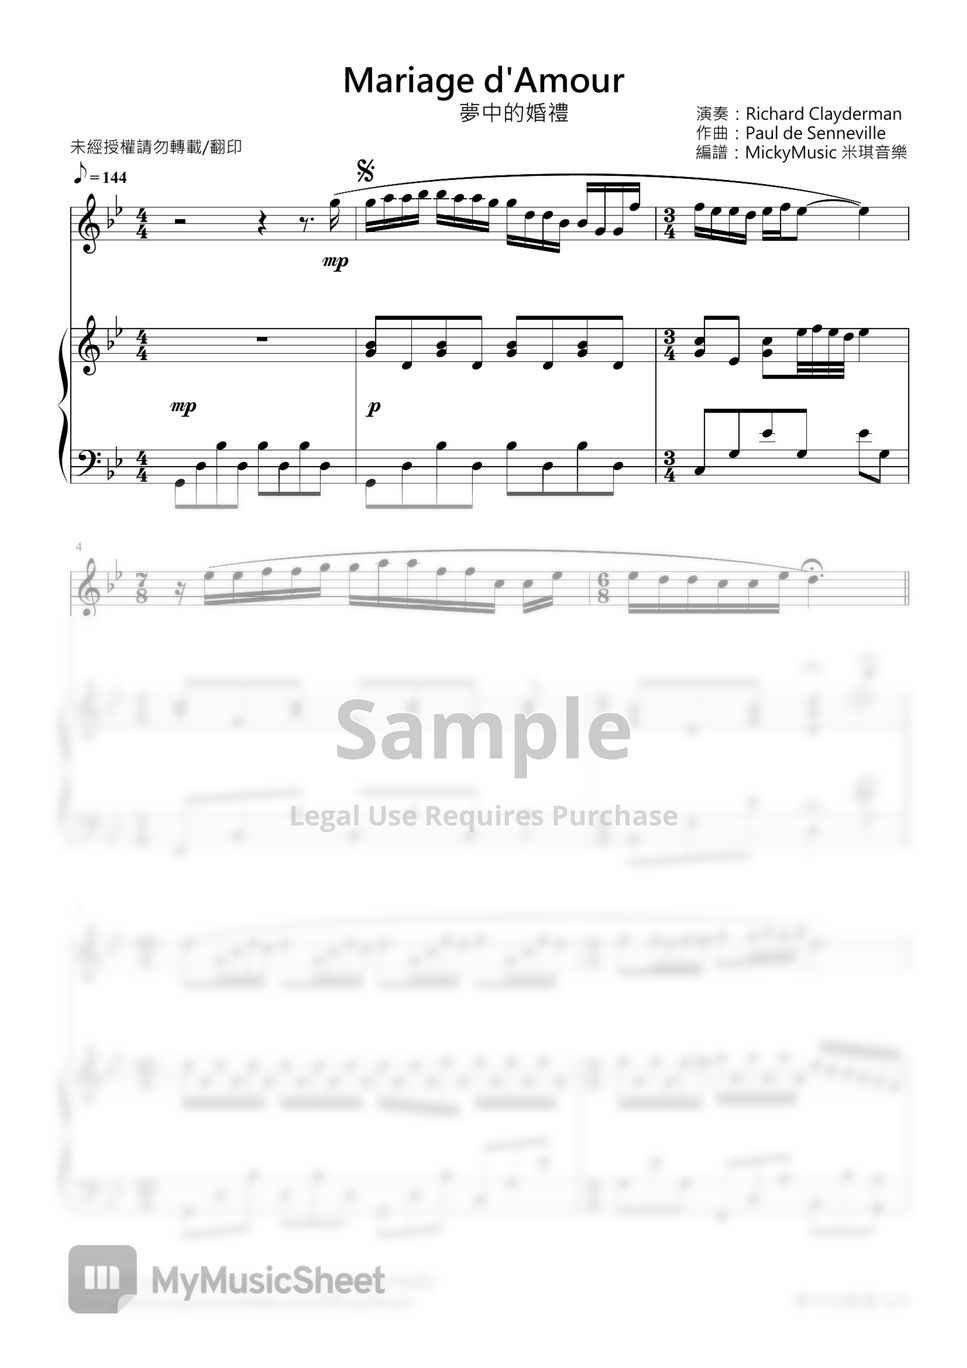 Paul de Senneville - 梦中的婚礼(Mariage d'Amour) (三行伴奏谱)(Gm) by MickyMusic